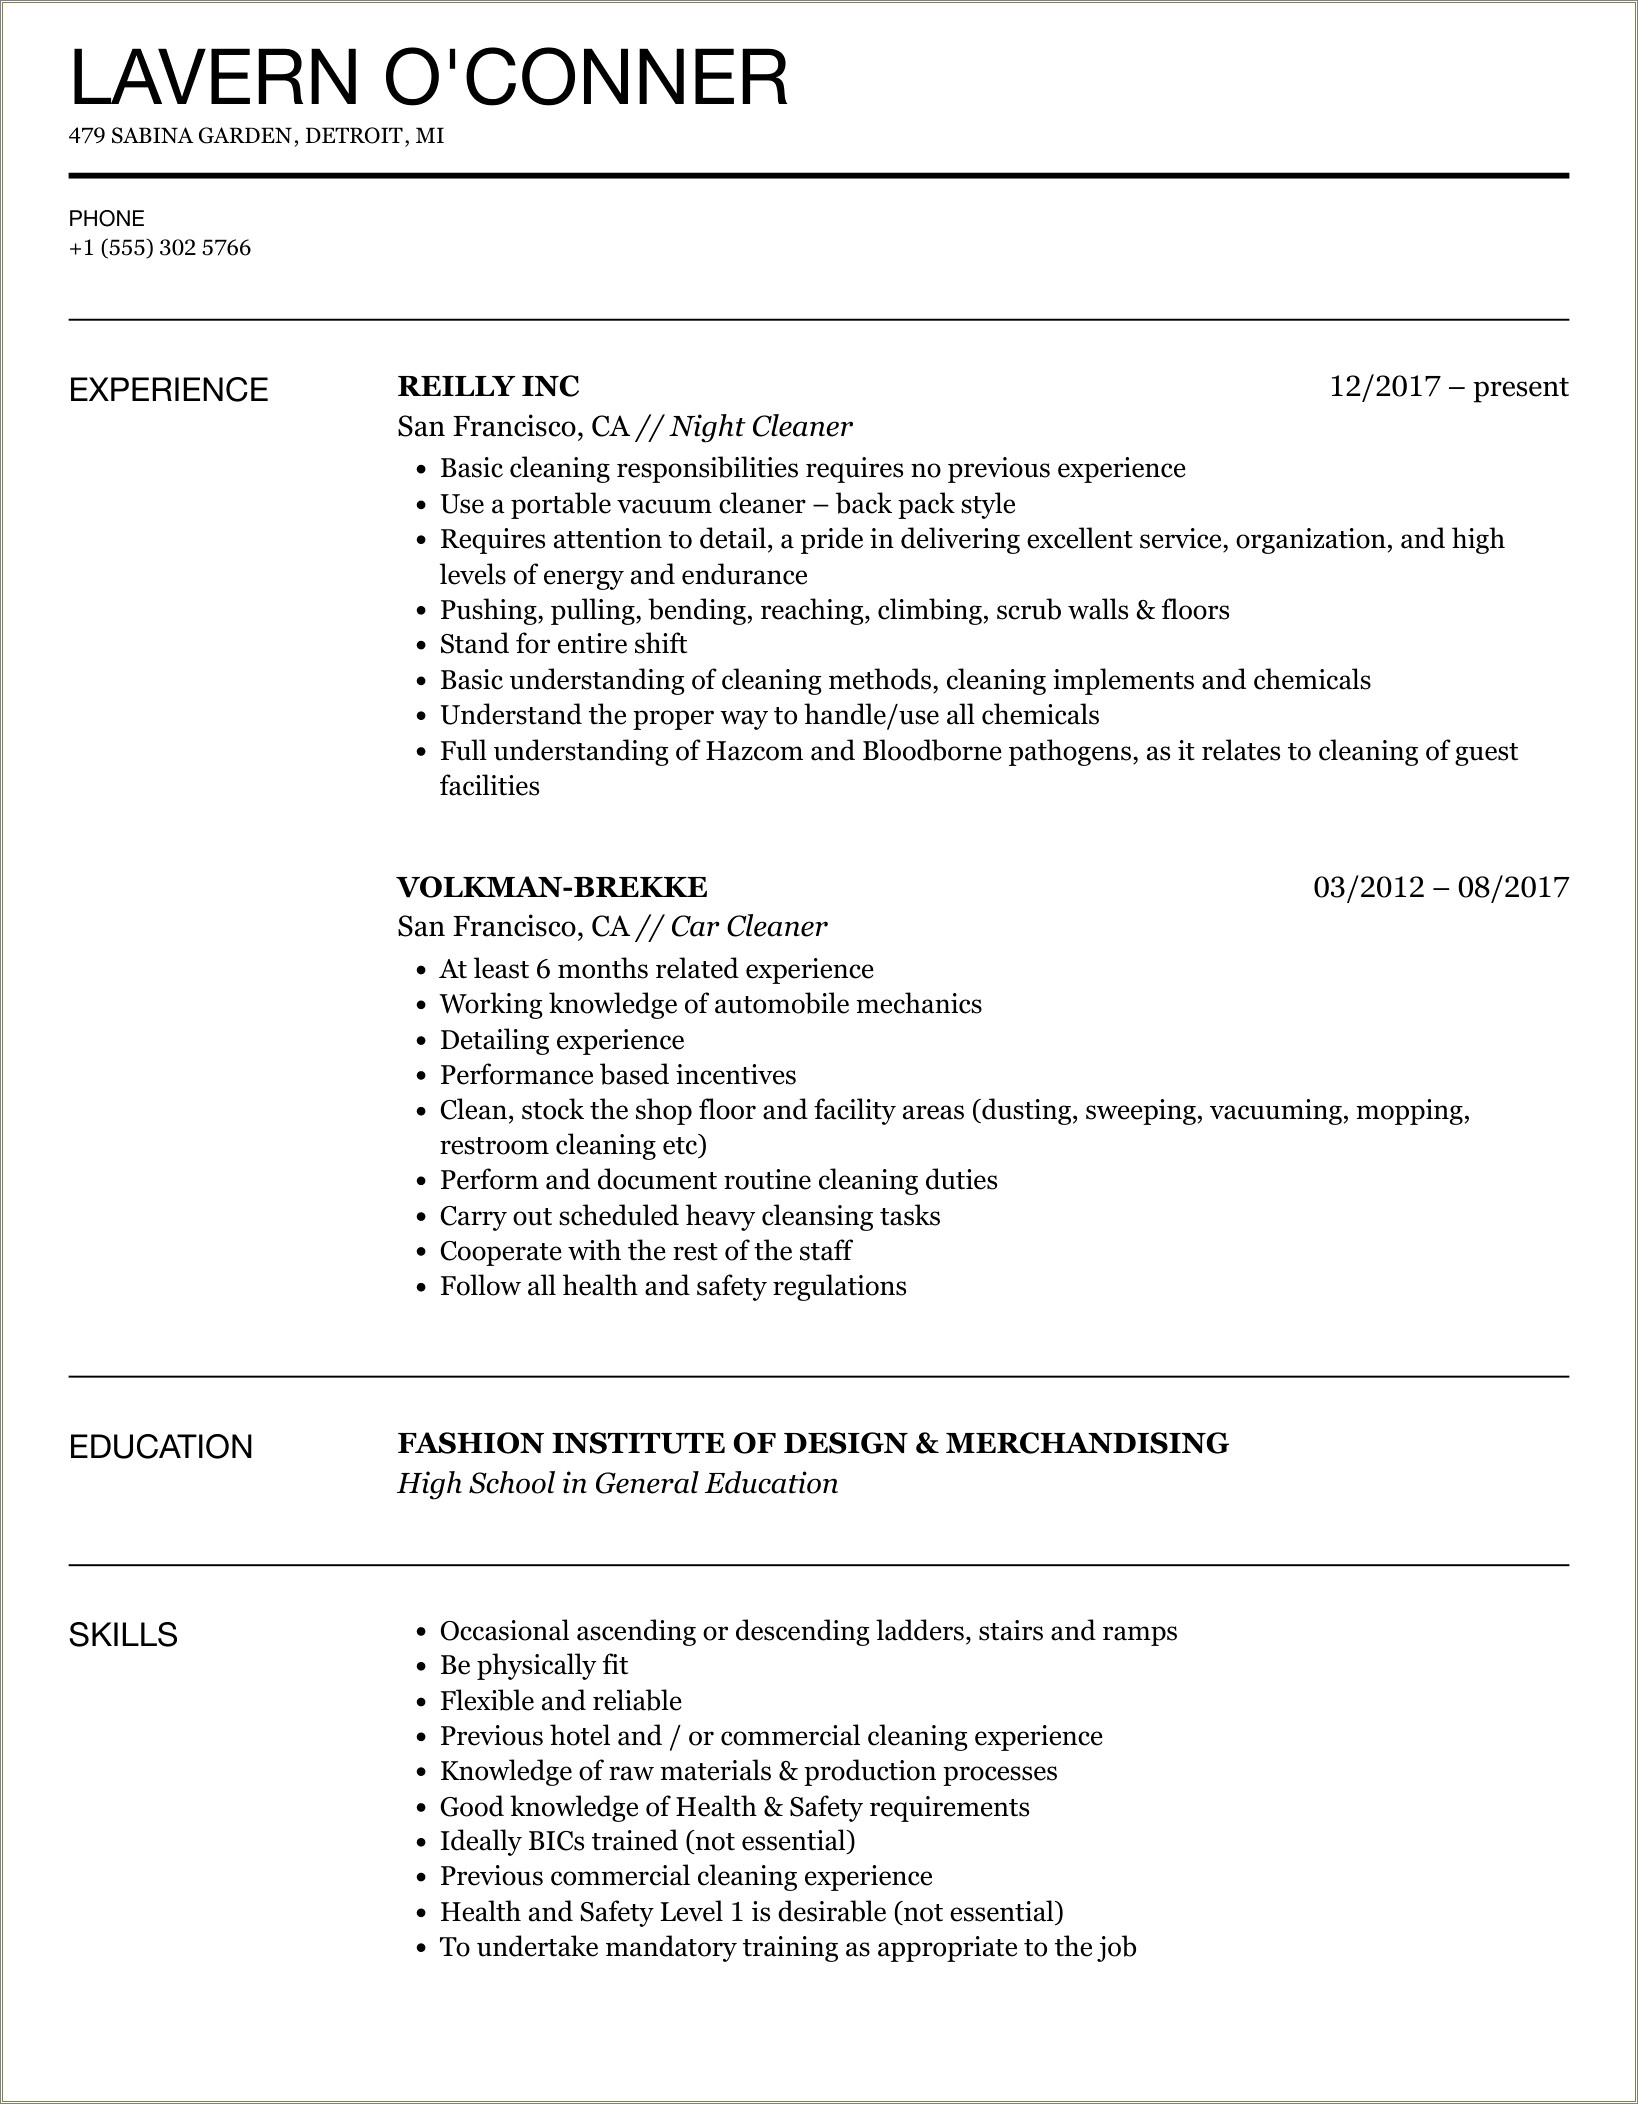 Commercial Cleaner Job Description For Resume